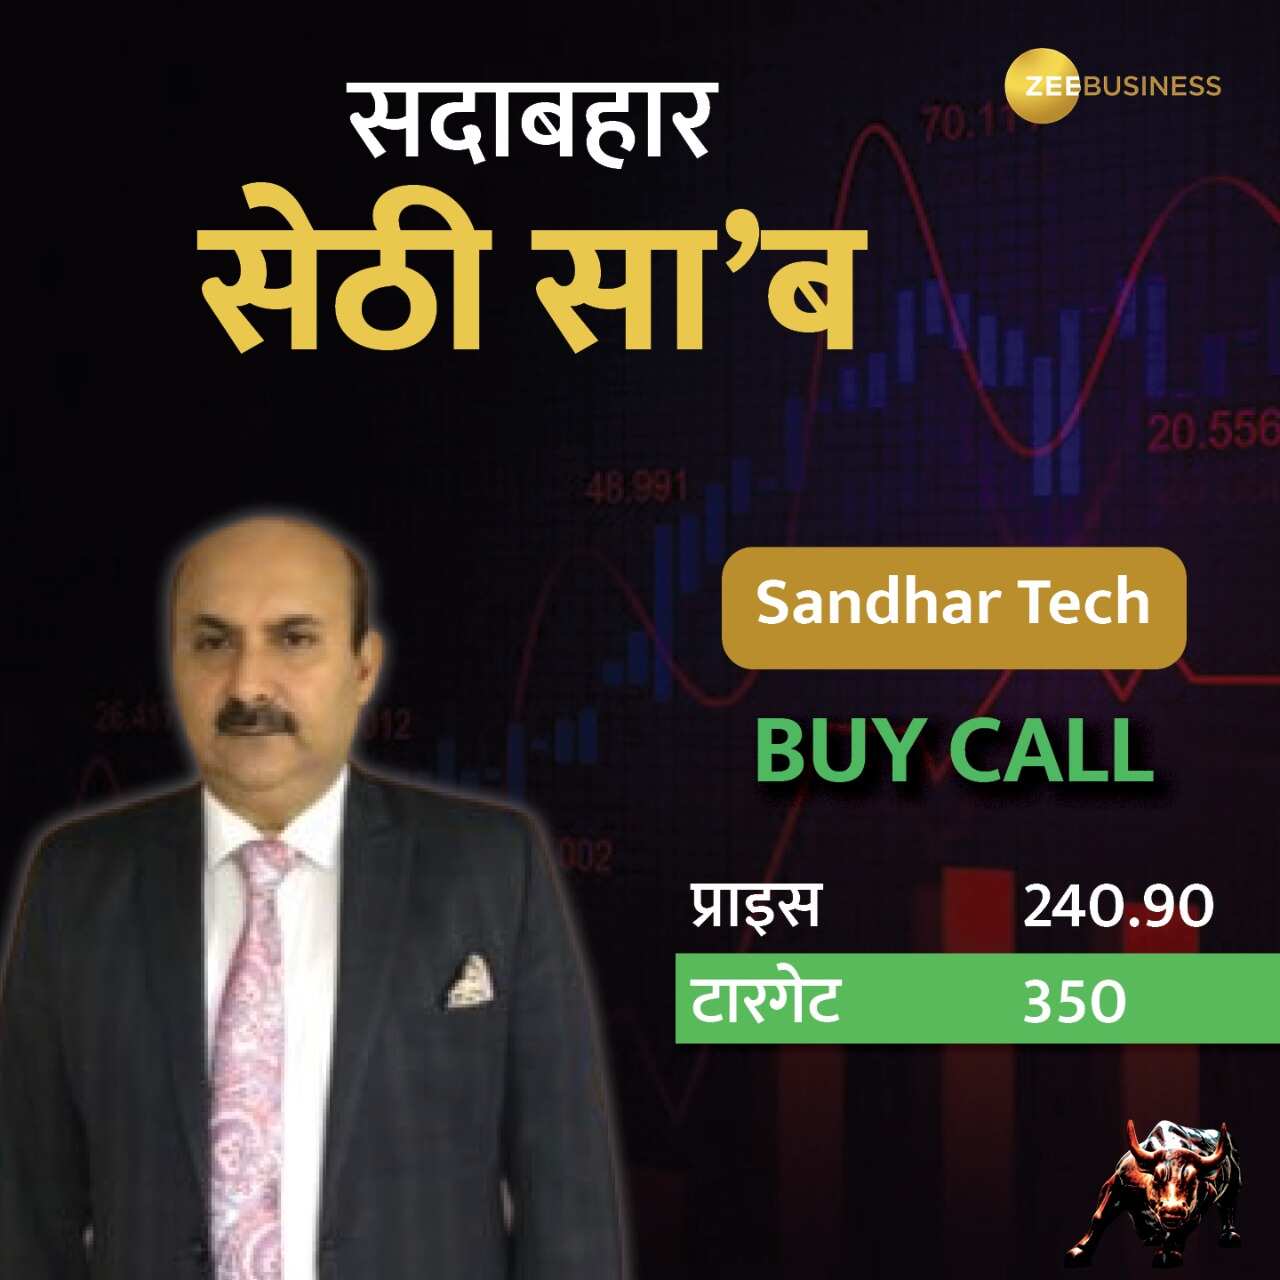 Sandhar Tech